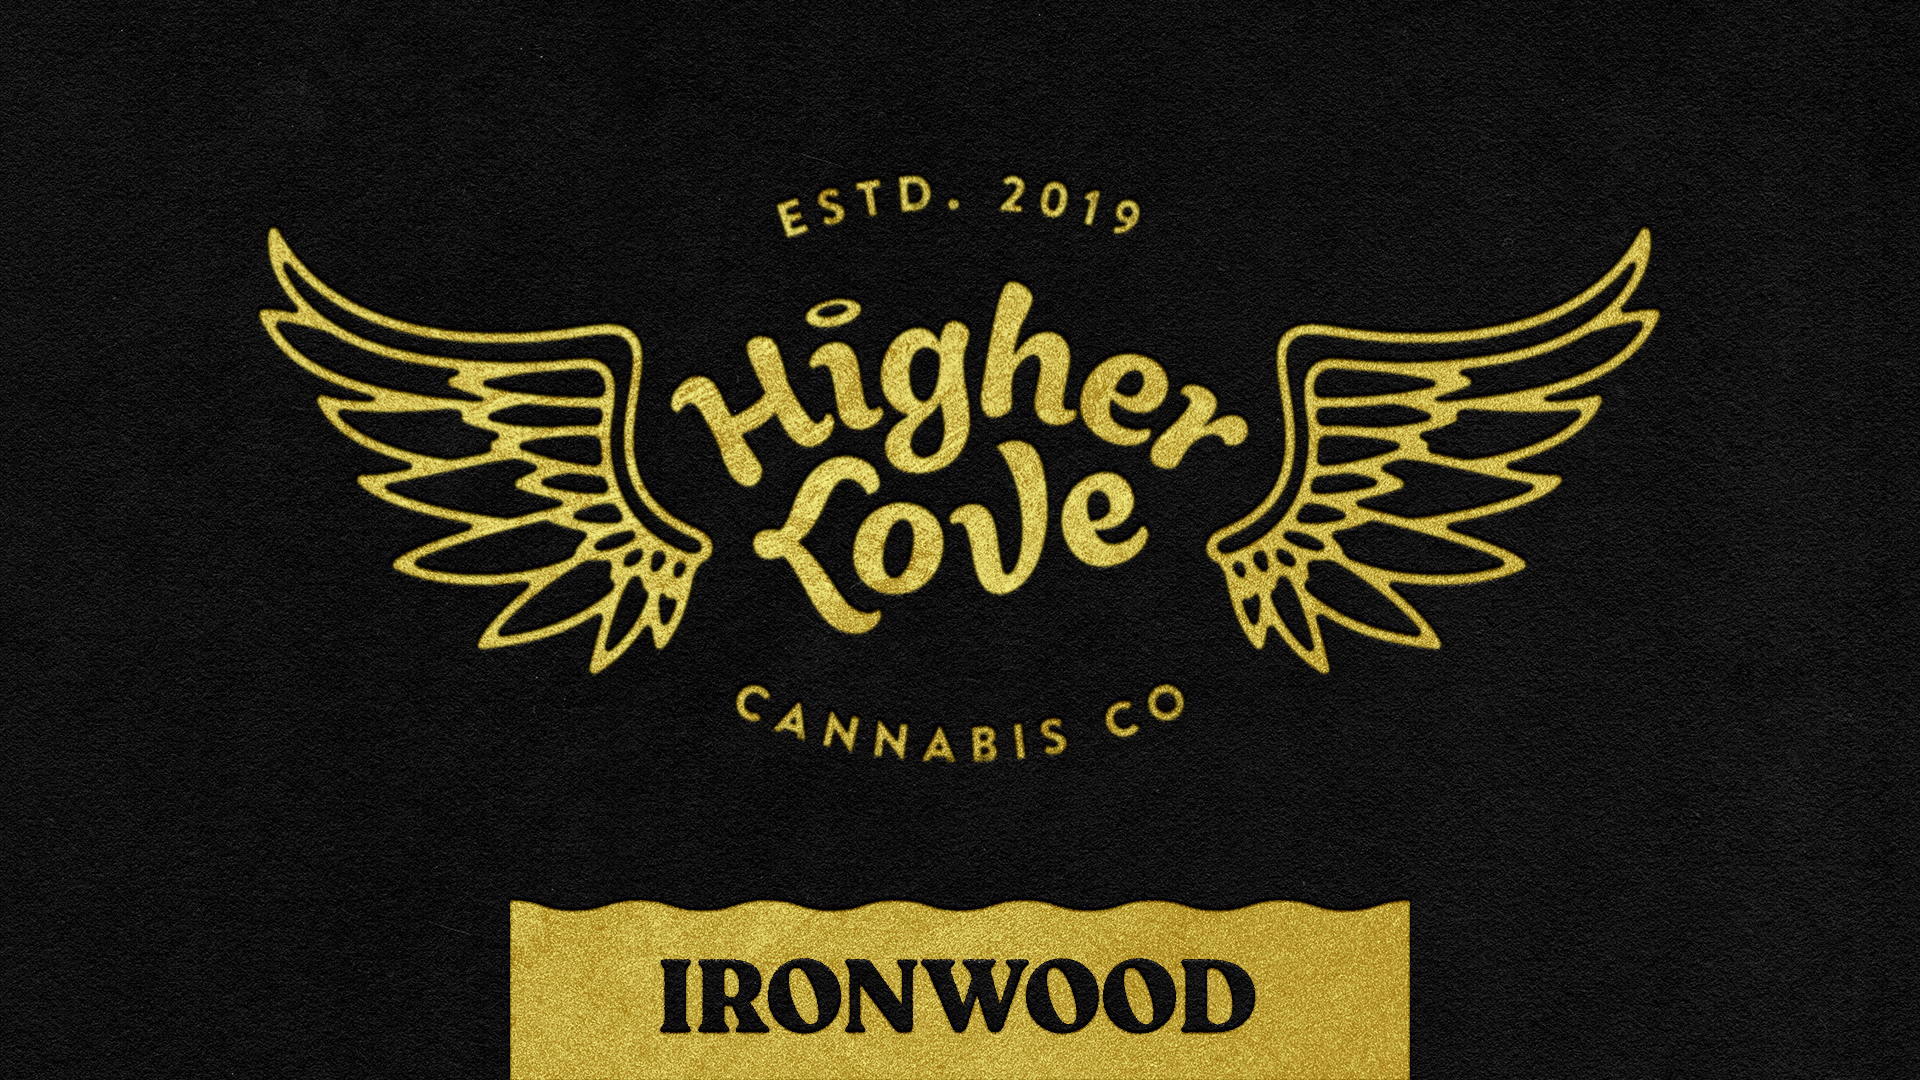 Find Higher Love Recreational Cannabis Stores in Michigan